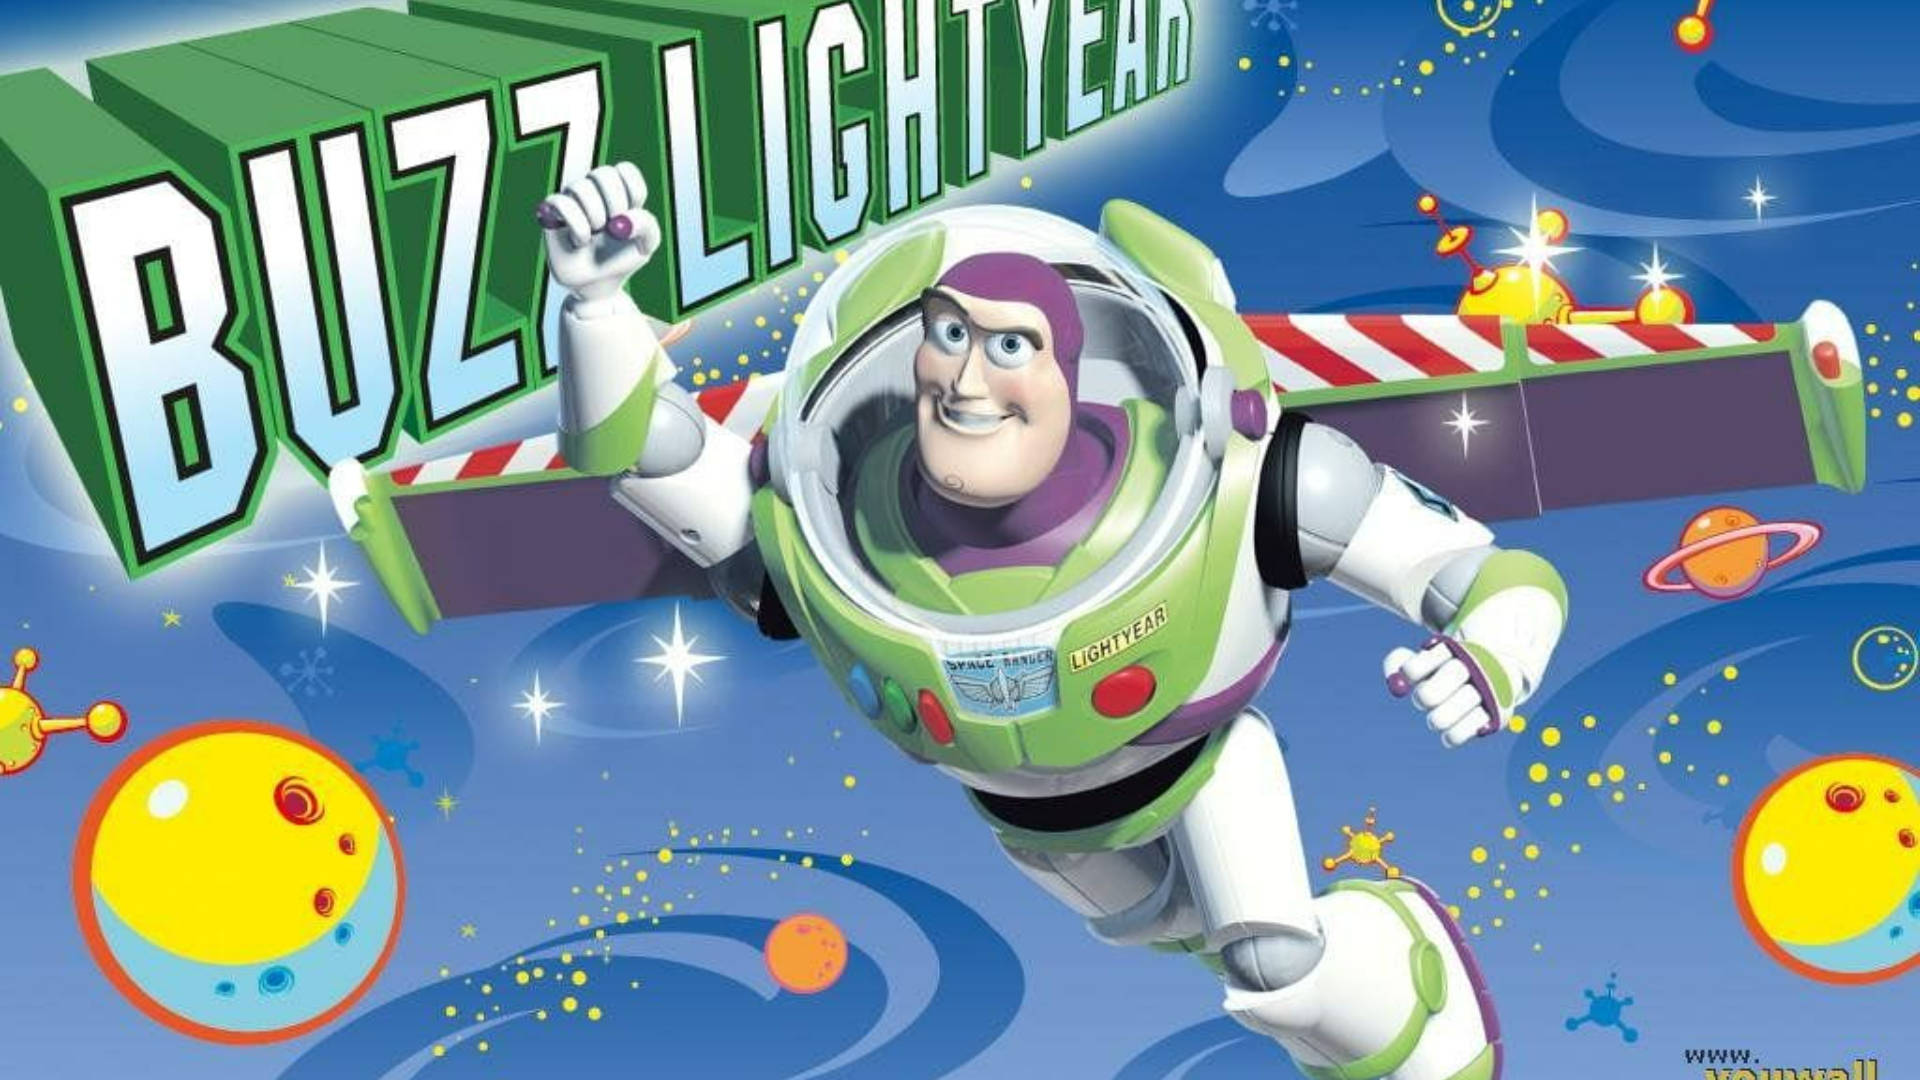 Buzz Lightyear enjoying a thrilling flight in space Wallpaper